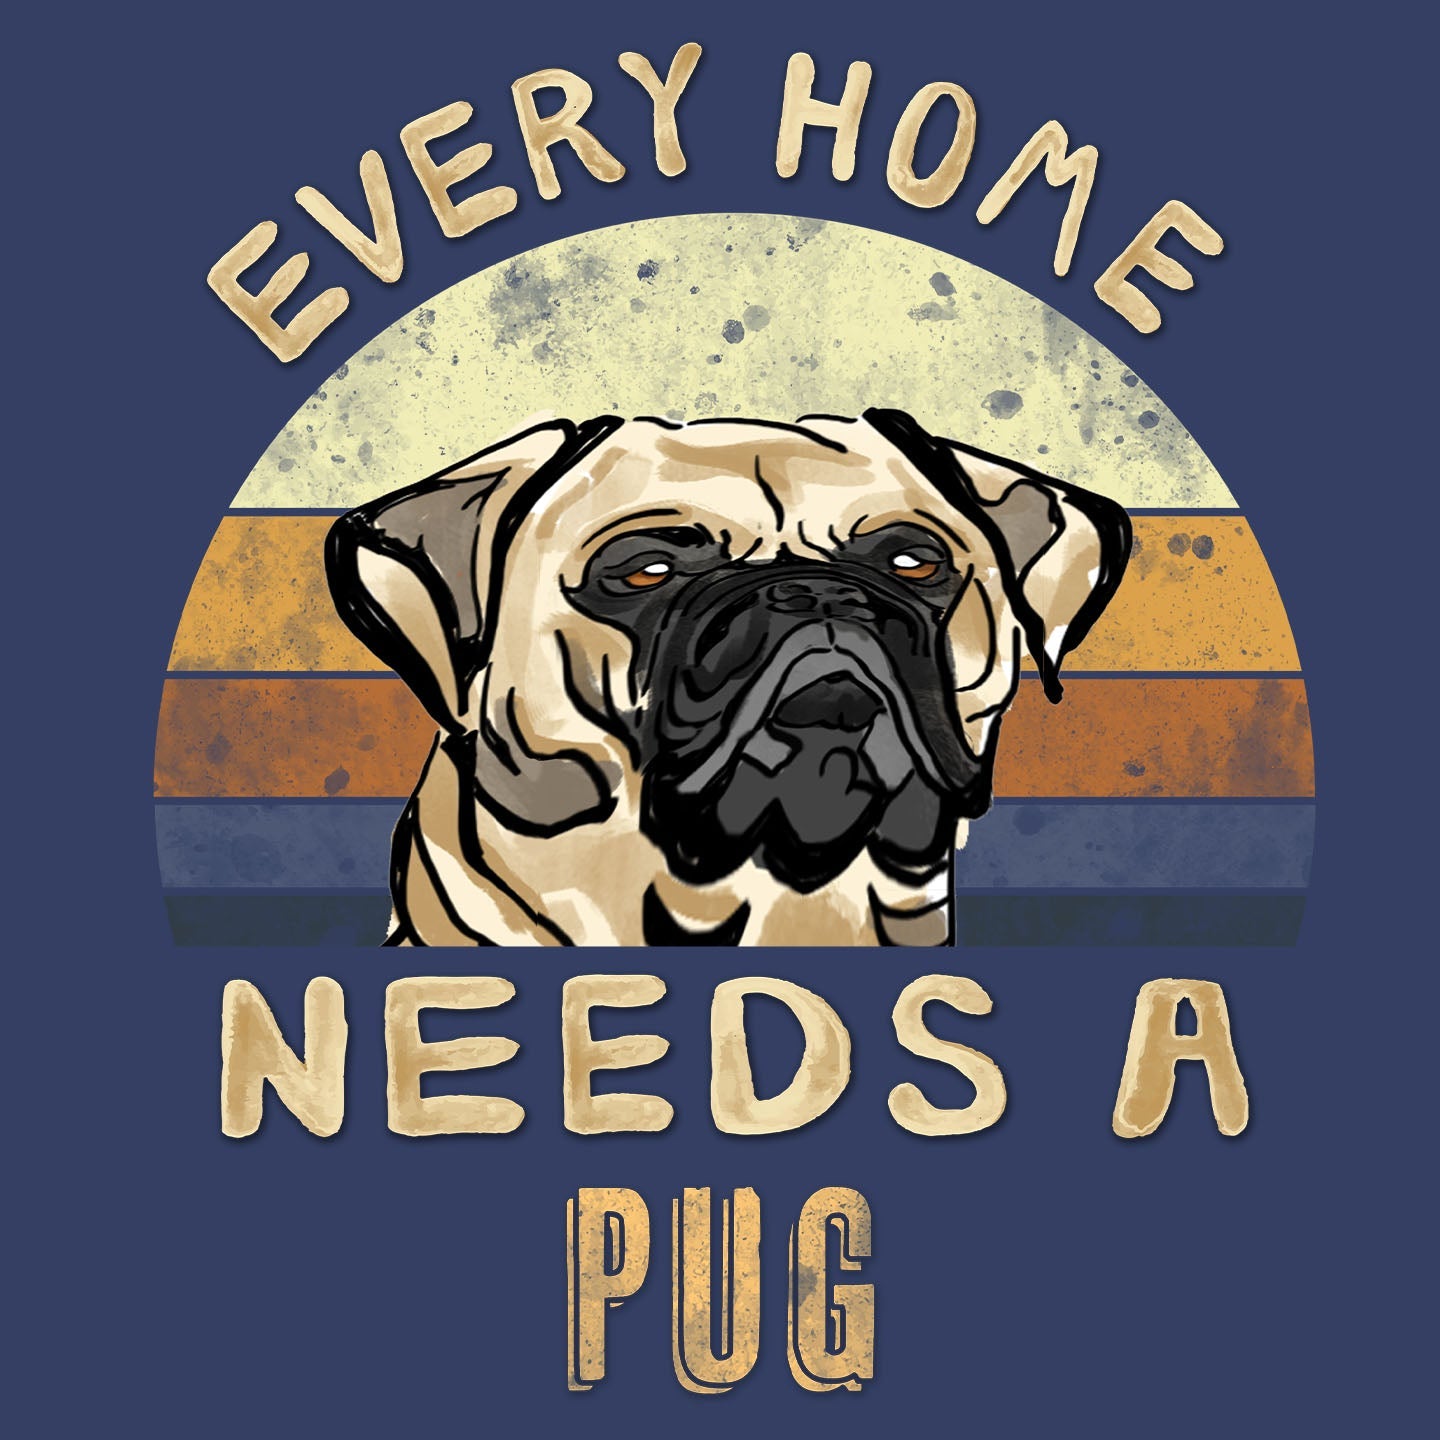 Every Home Needs a Pug - Adult Unisex Crewneck Sweatshirt